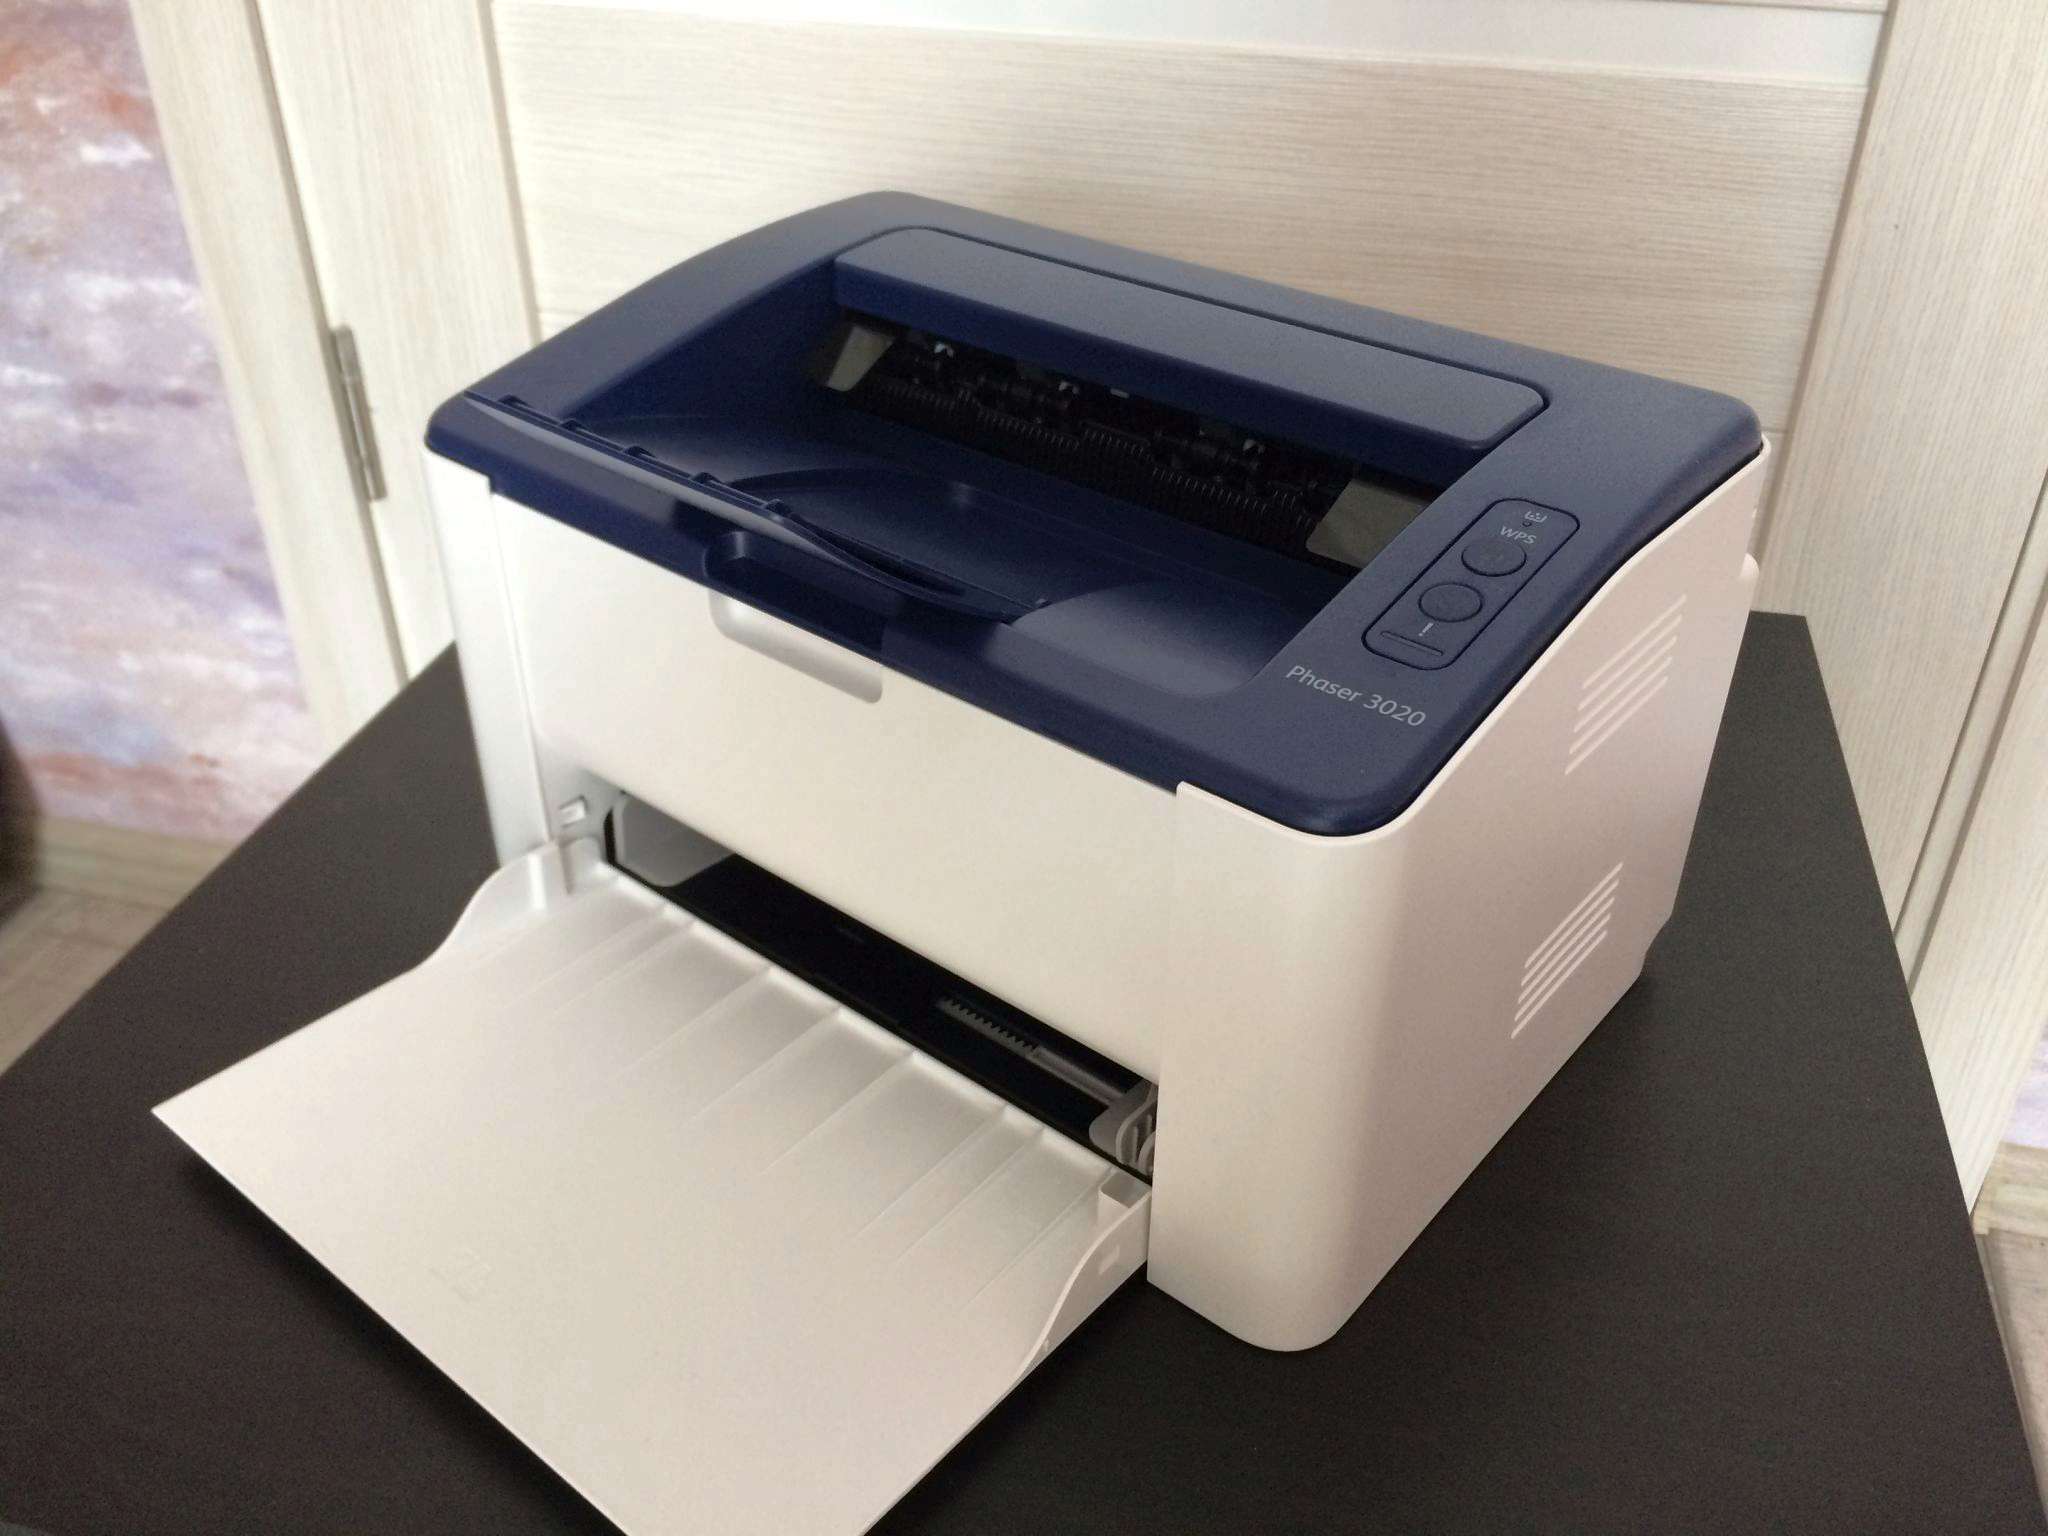 Купить принтер xerox 3020. Xerox Phaser 3020bi. Принтер лазерный Xerox Phaser 3020. Принтер Xerox Phaser 3020bi. Принтер Xerox Printer Phaser 3020bi.